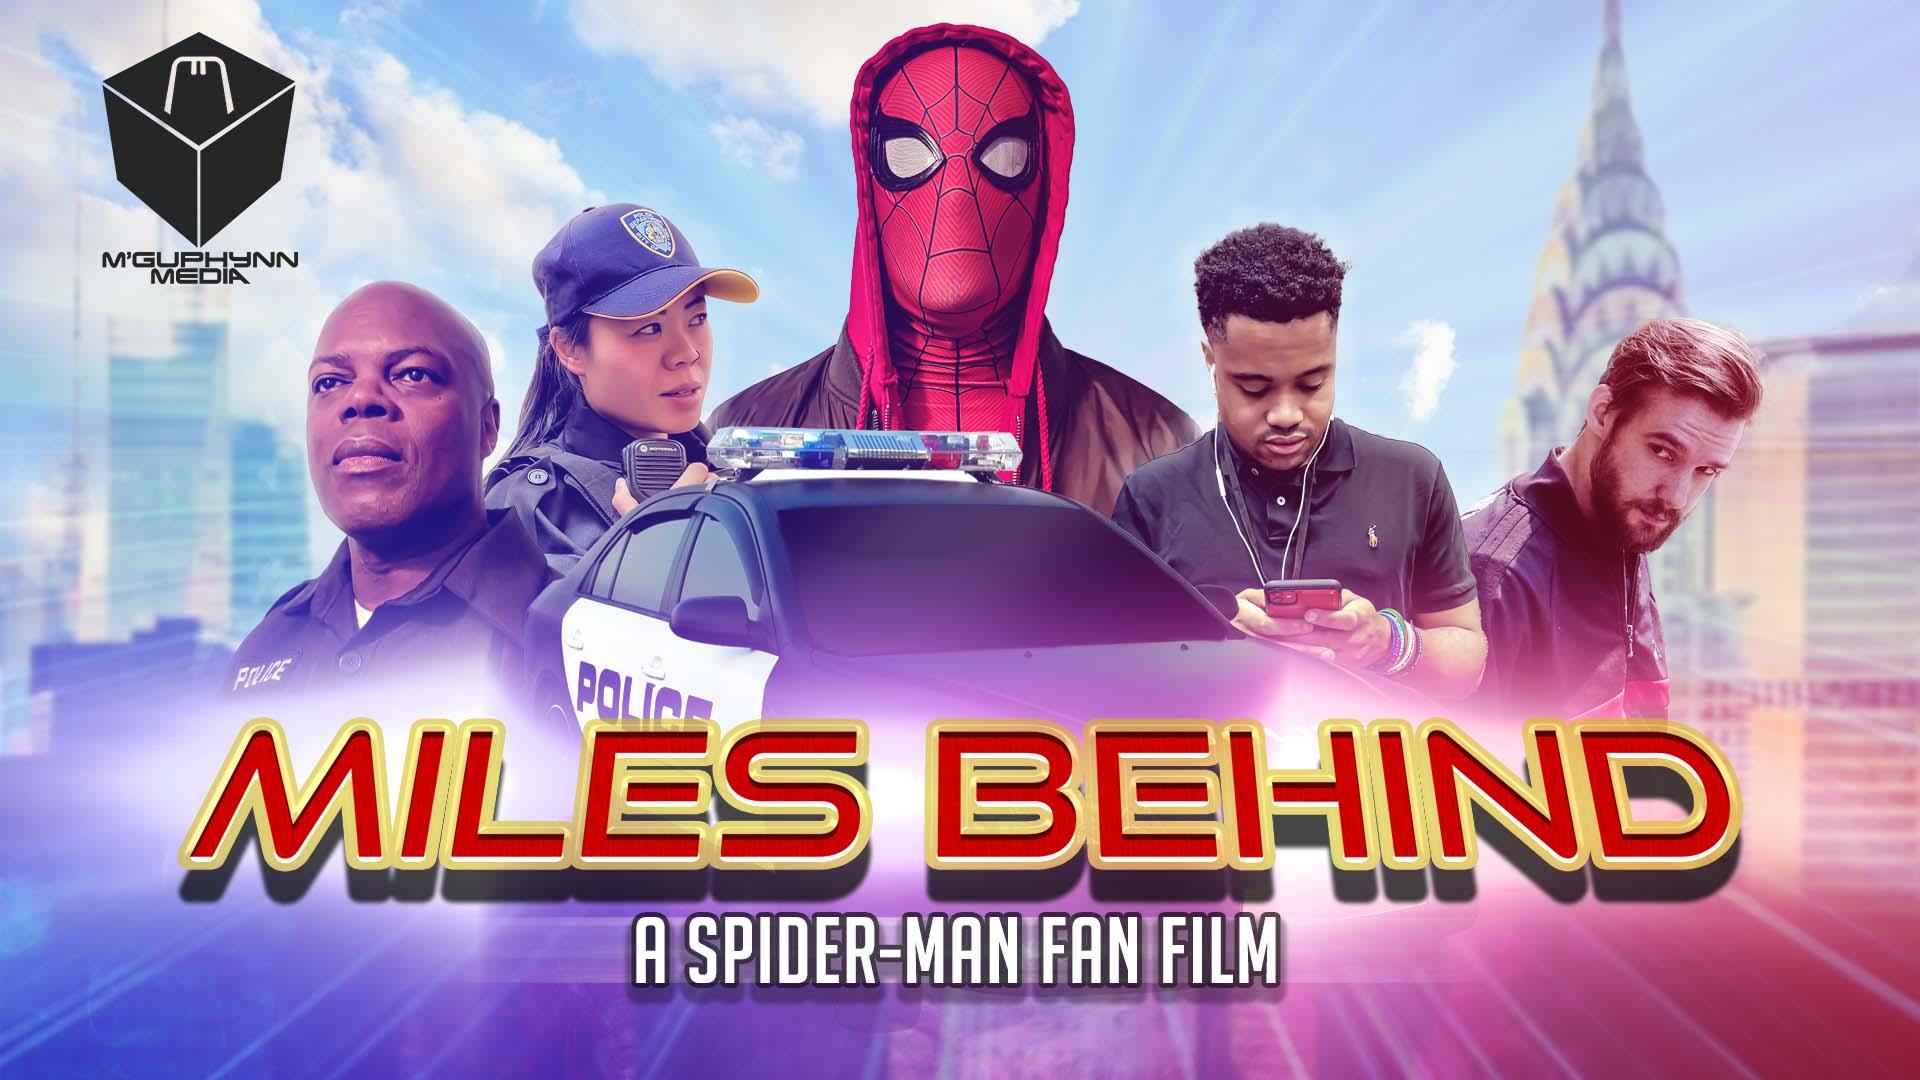 MILES BEHIND: A Spider-Man Fan Film